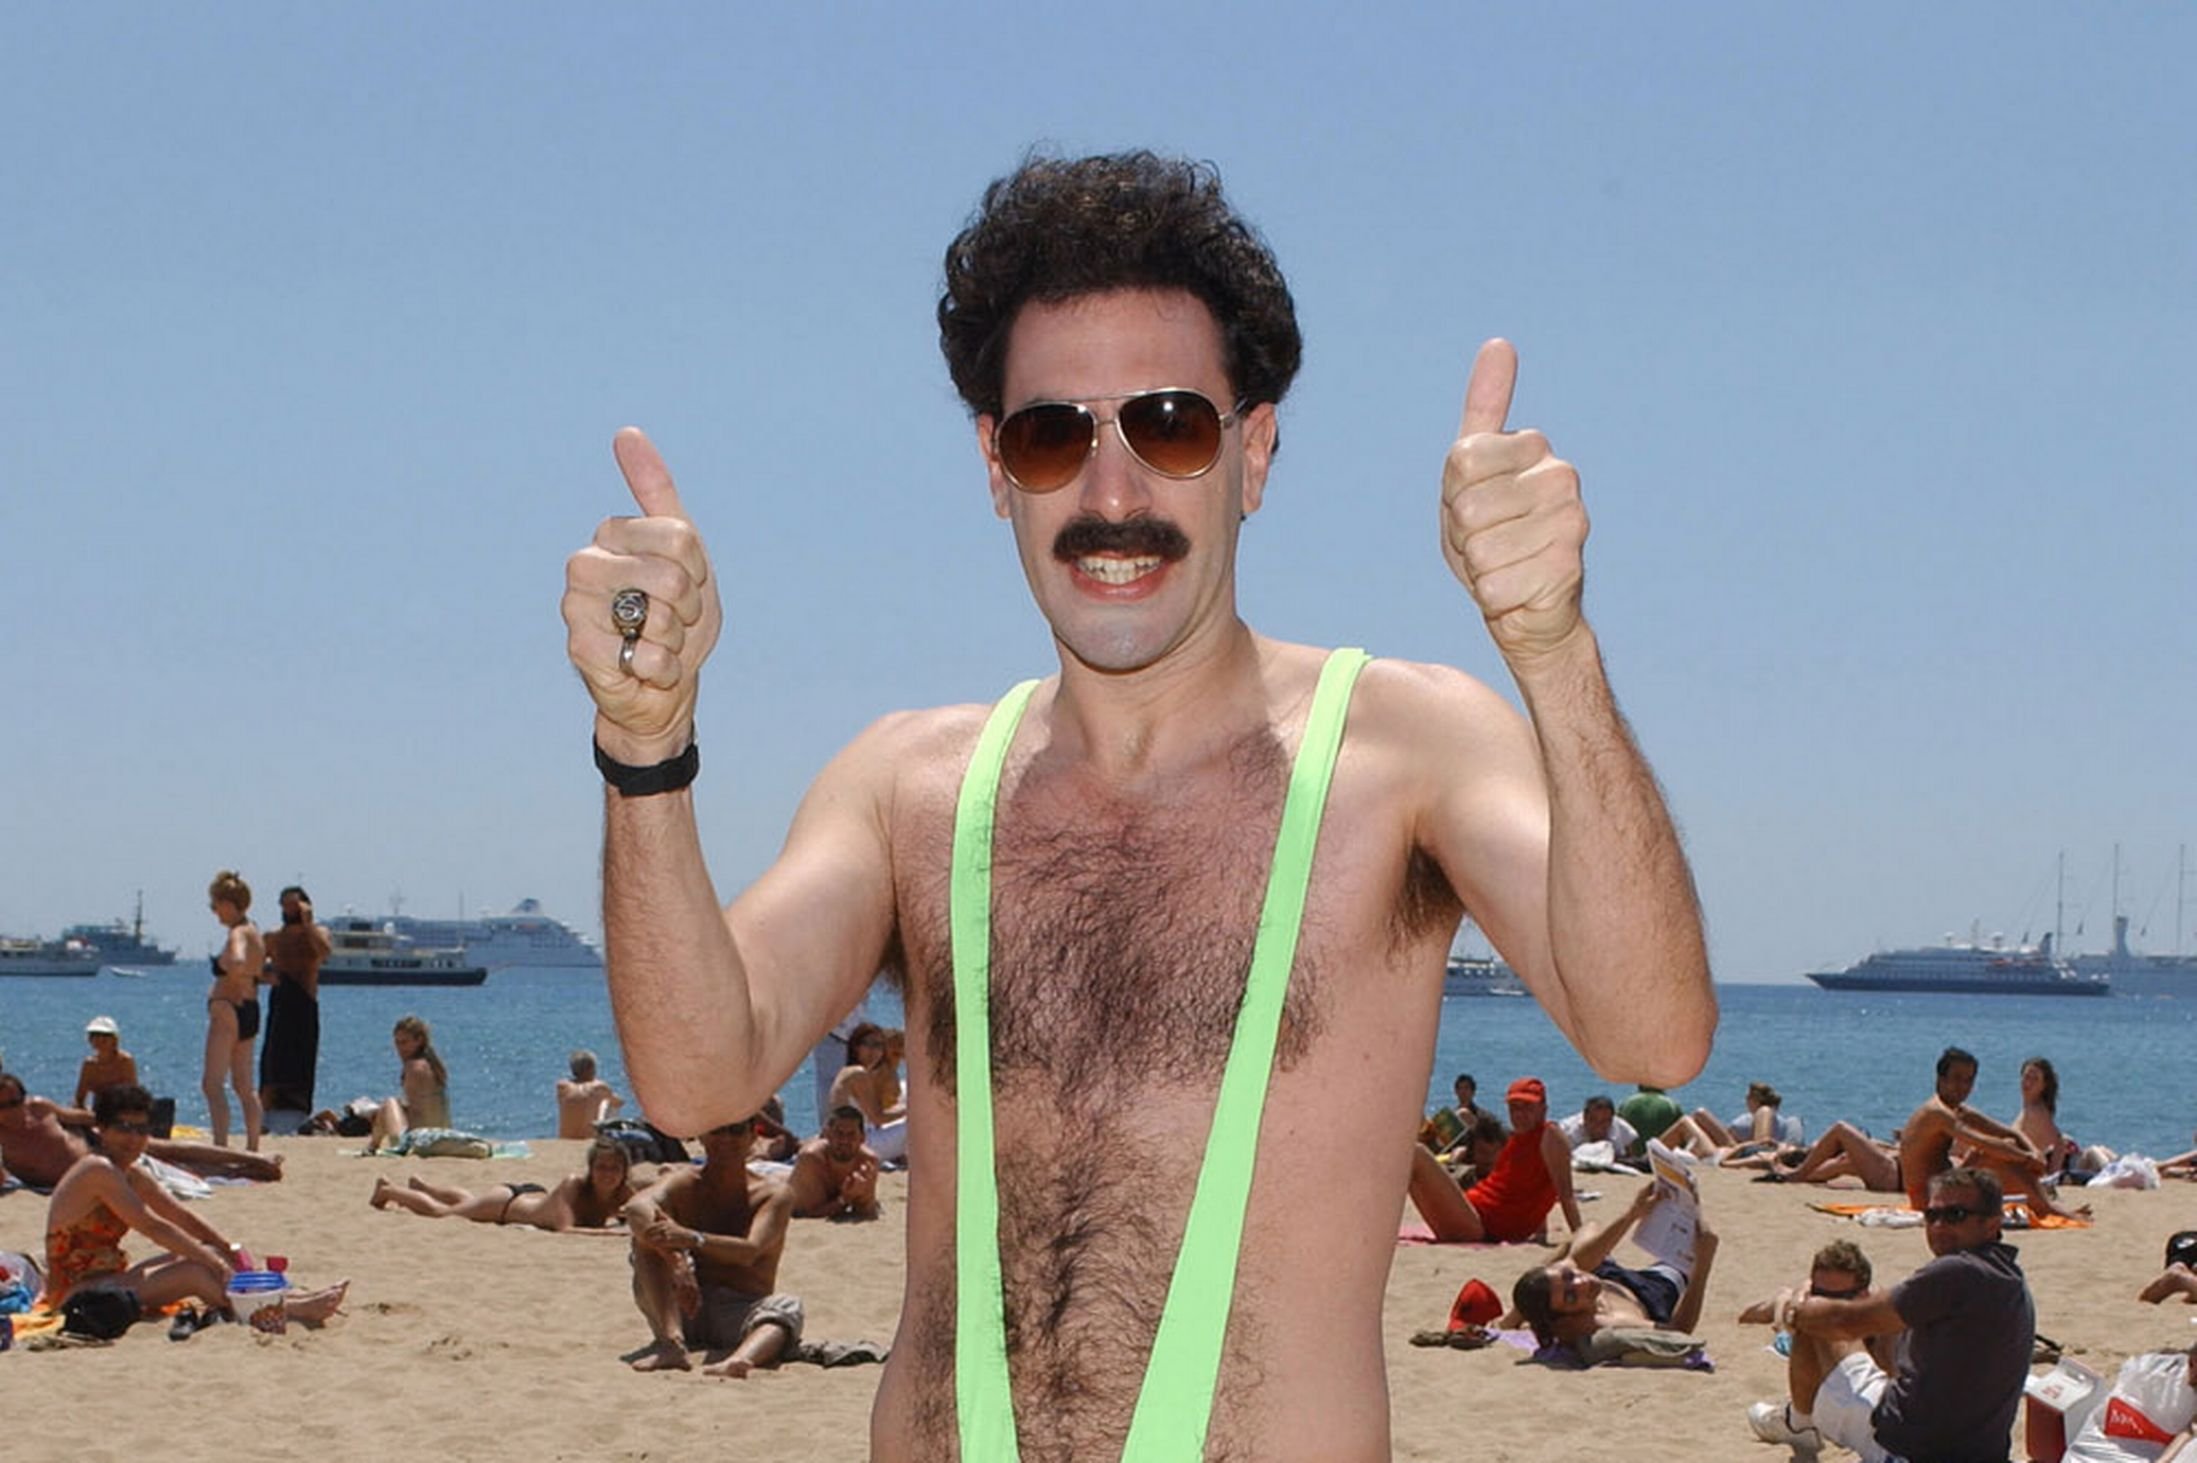 Borat Swimsuit GIFs